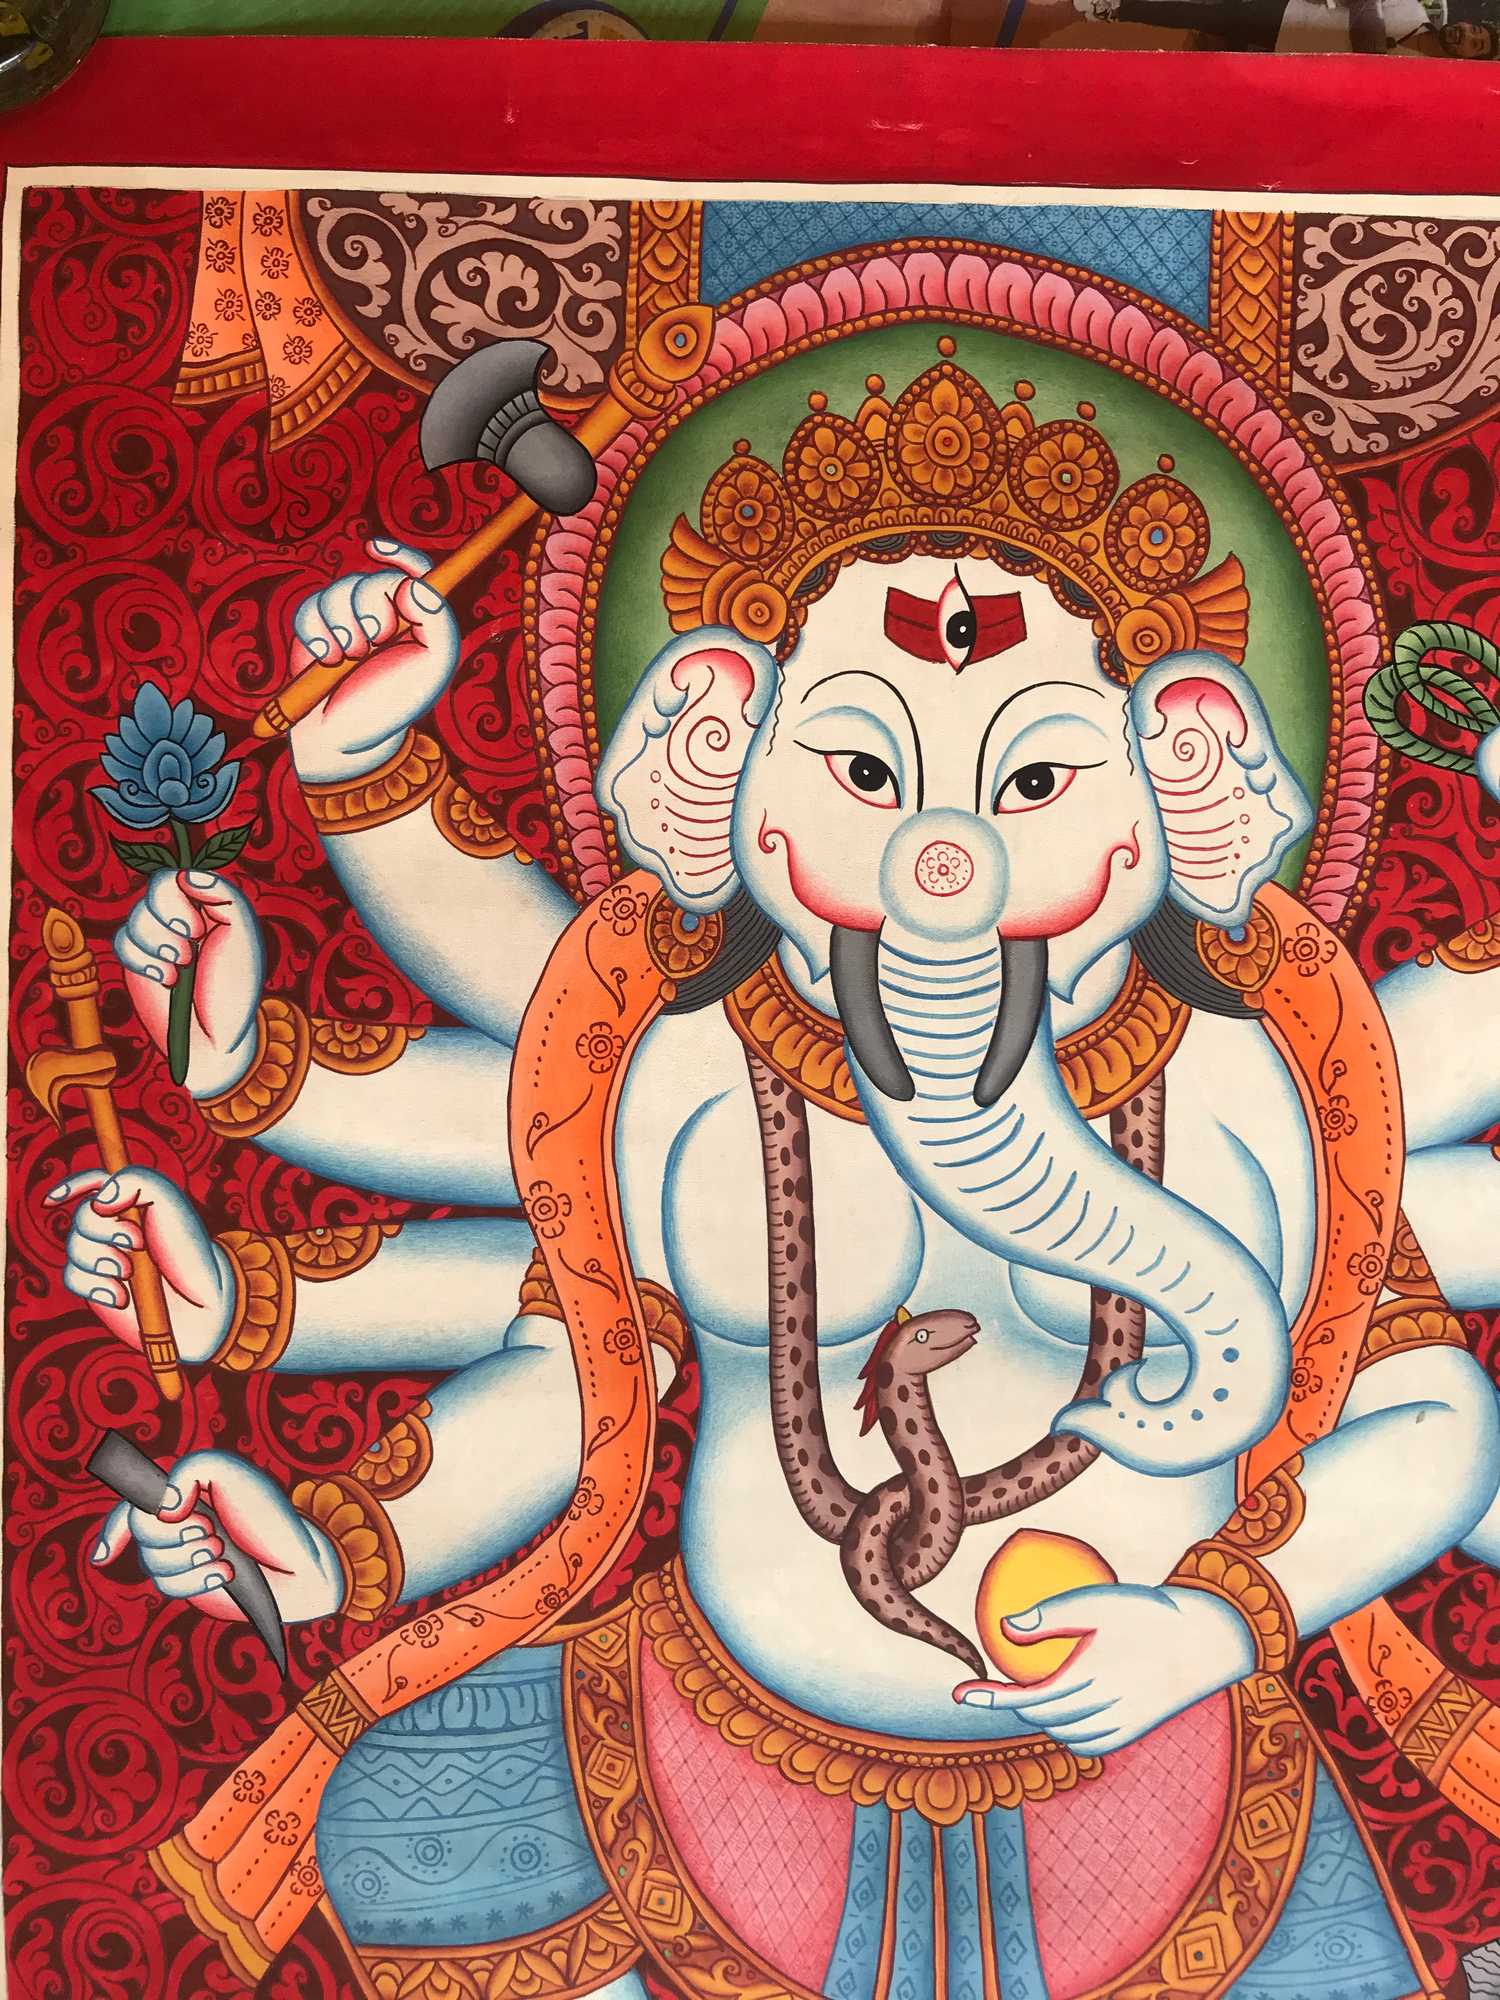 Wandbehang Bild Ganesh  Indien Bollywood Thangka Ganesha OM goa hippie  kpal 8 